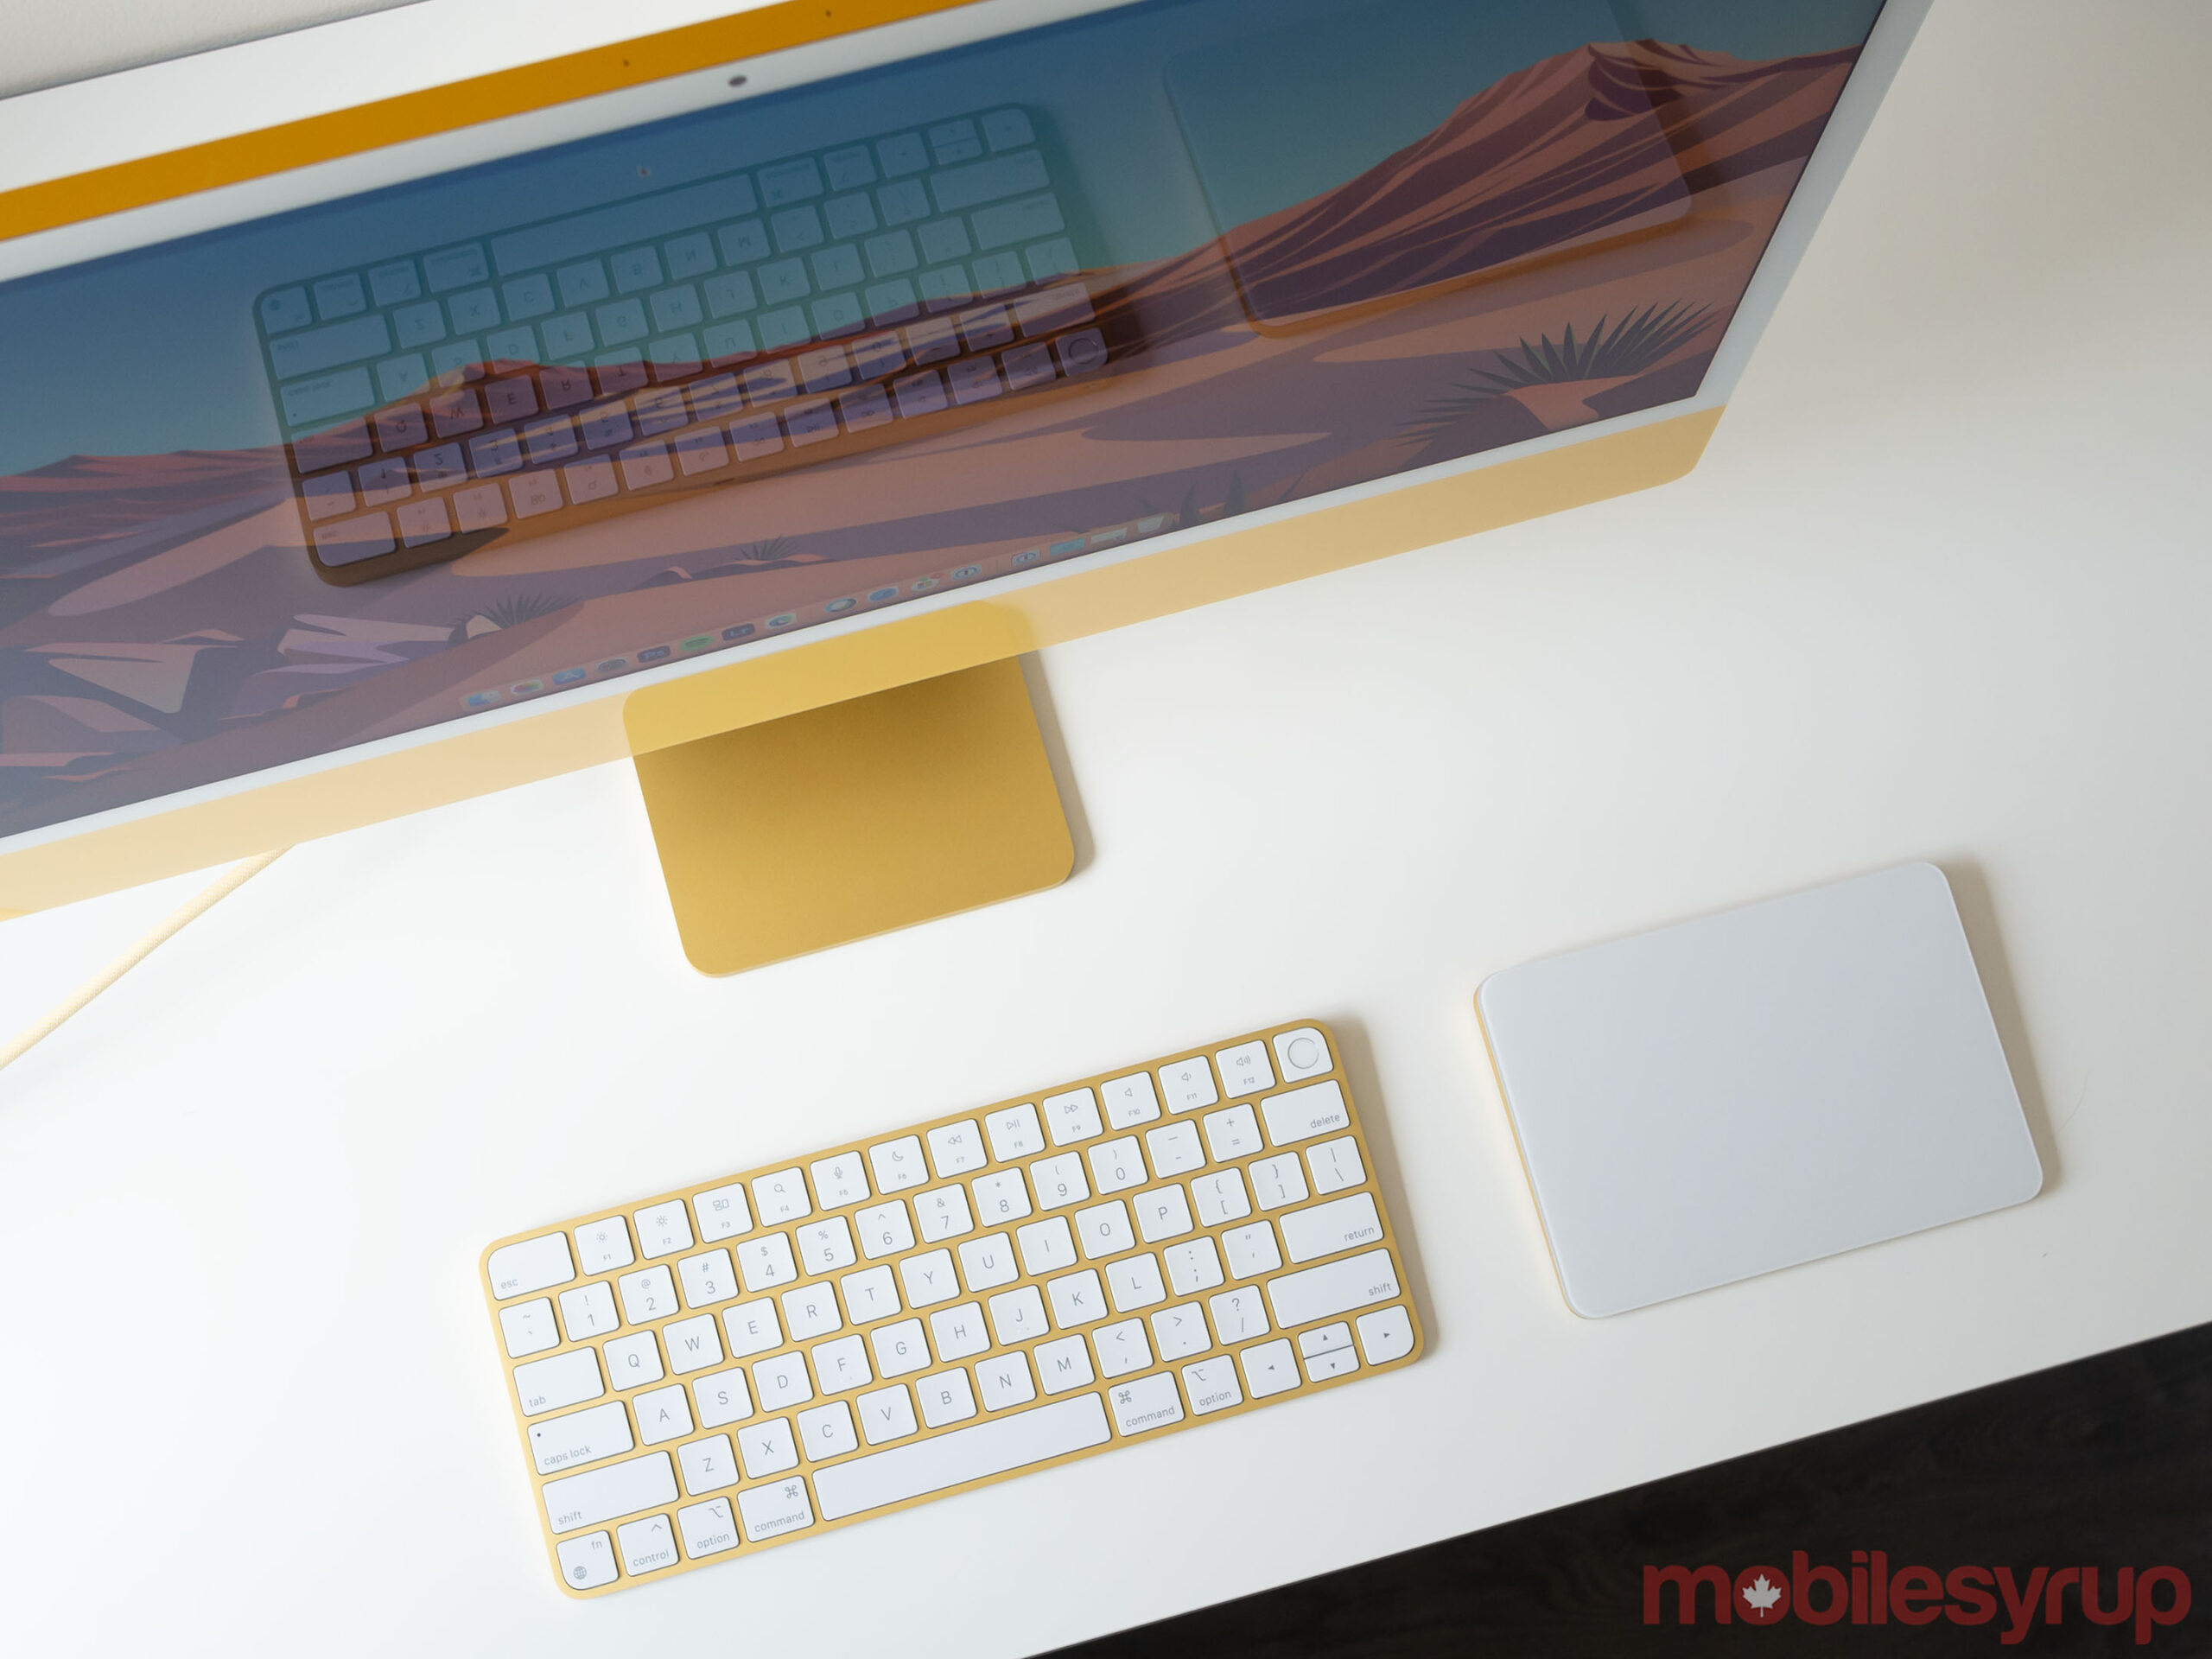 24-inch iMac 2021 top-down view 